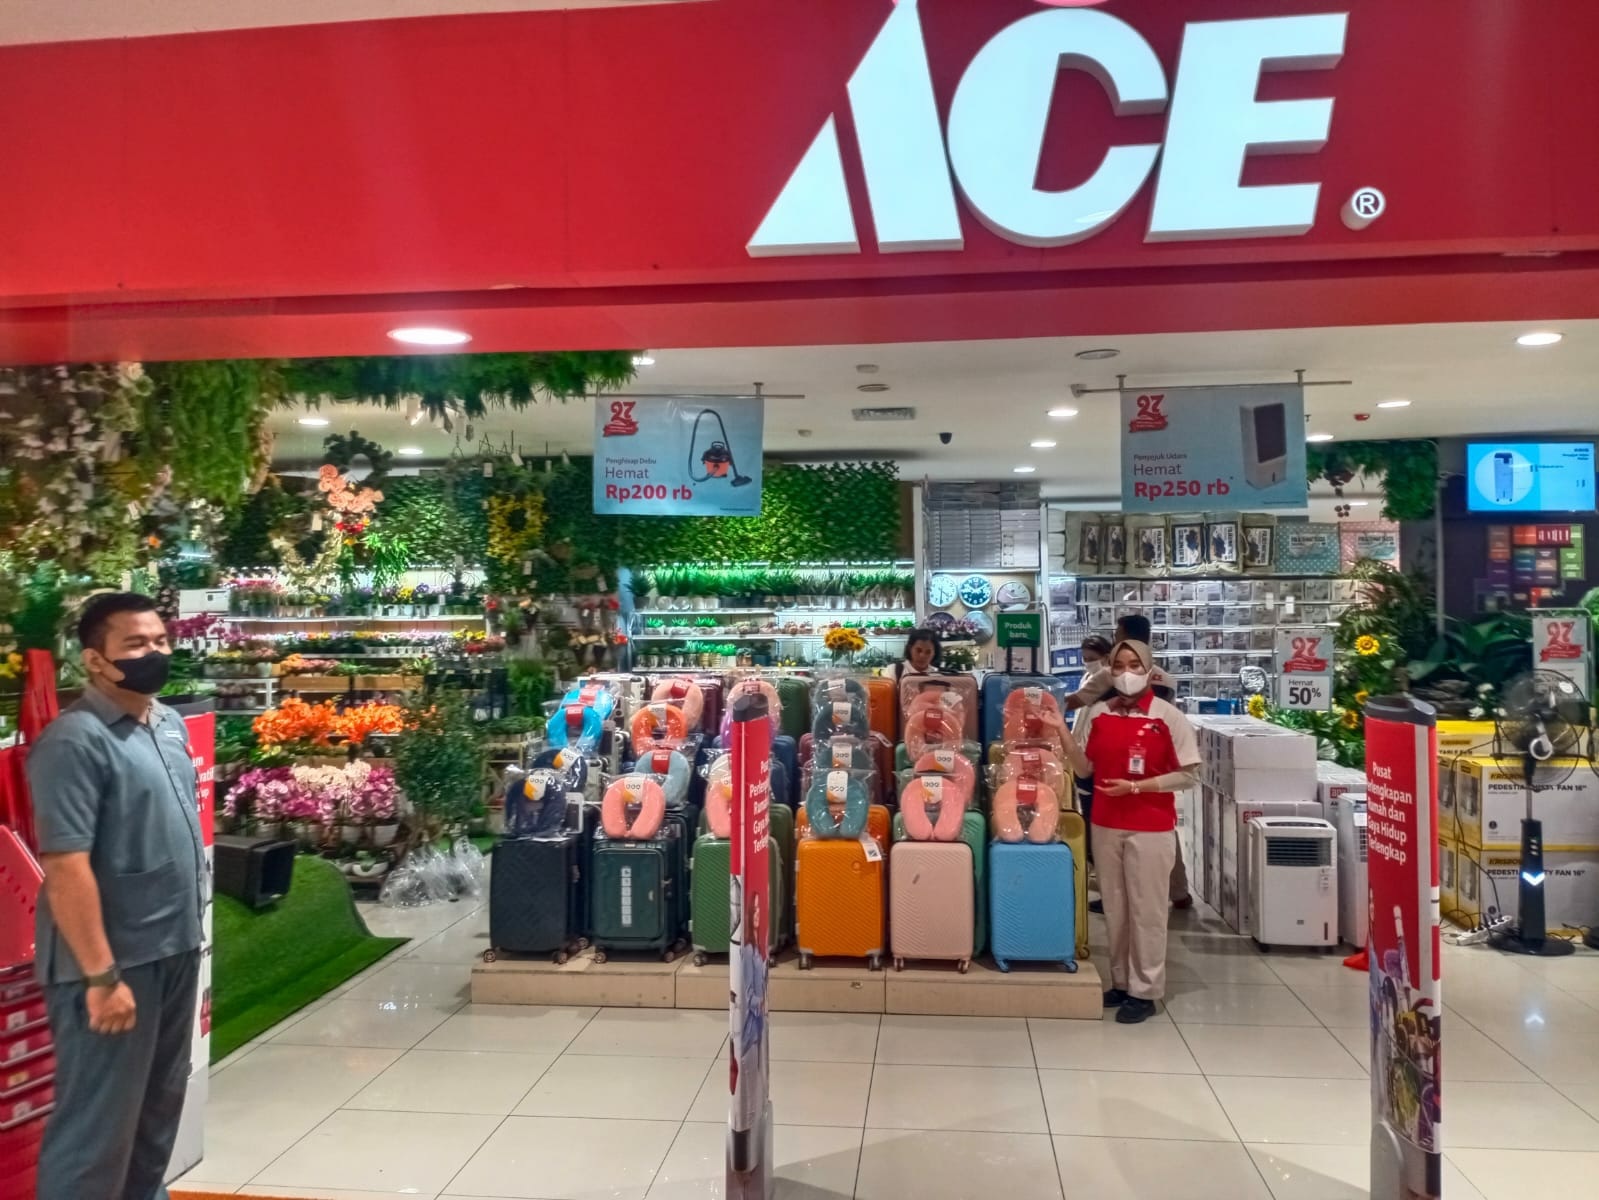 Ace Tawarkan Program All Day Sale, Berupa Potongan 10%